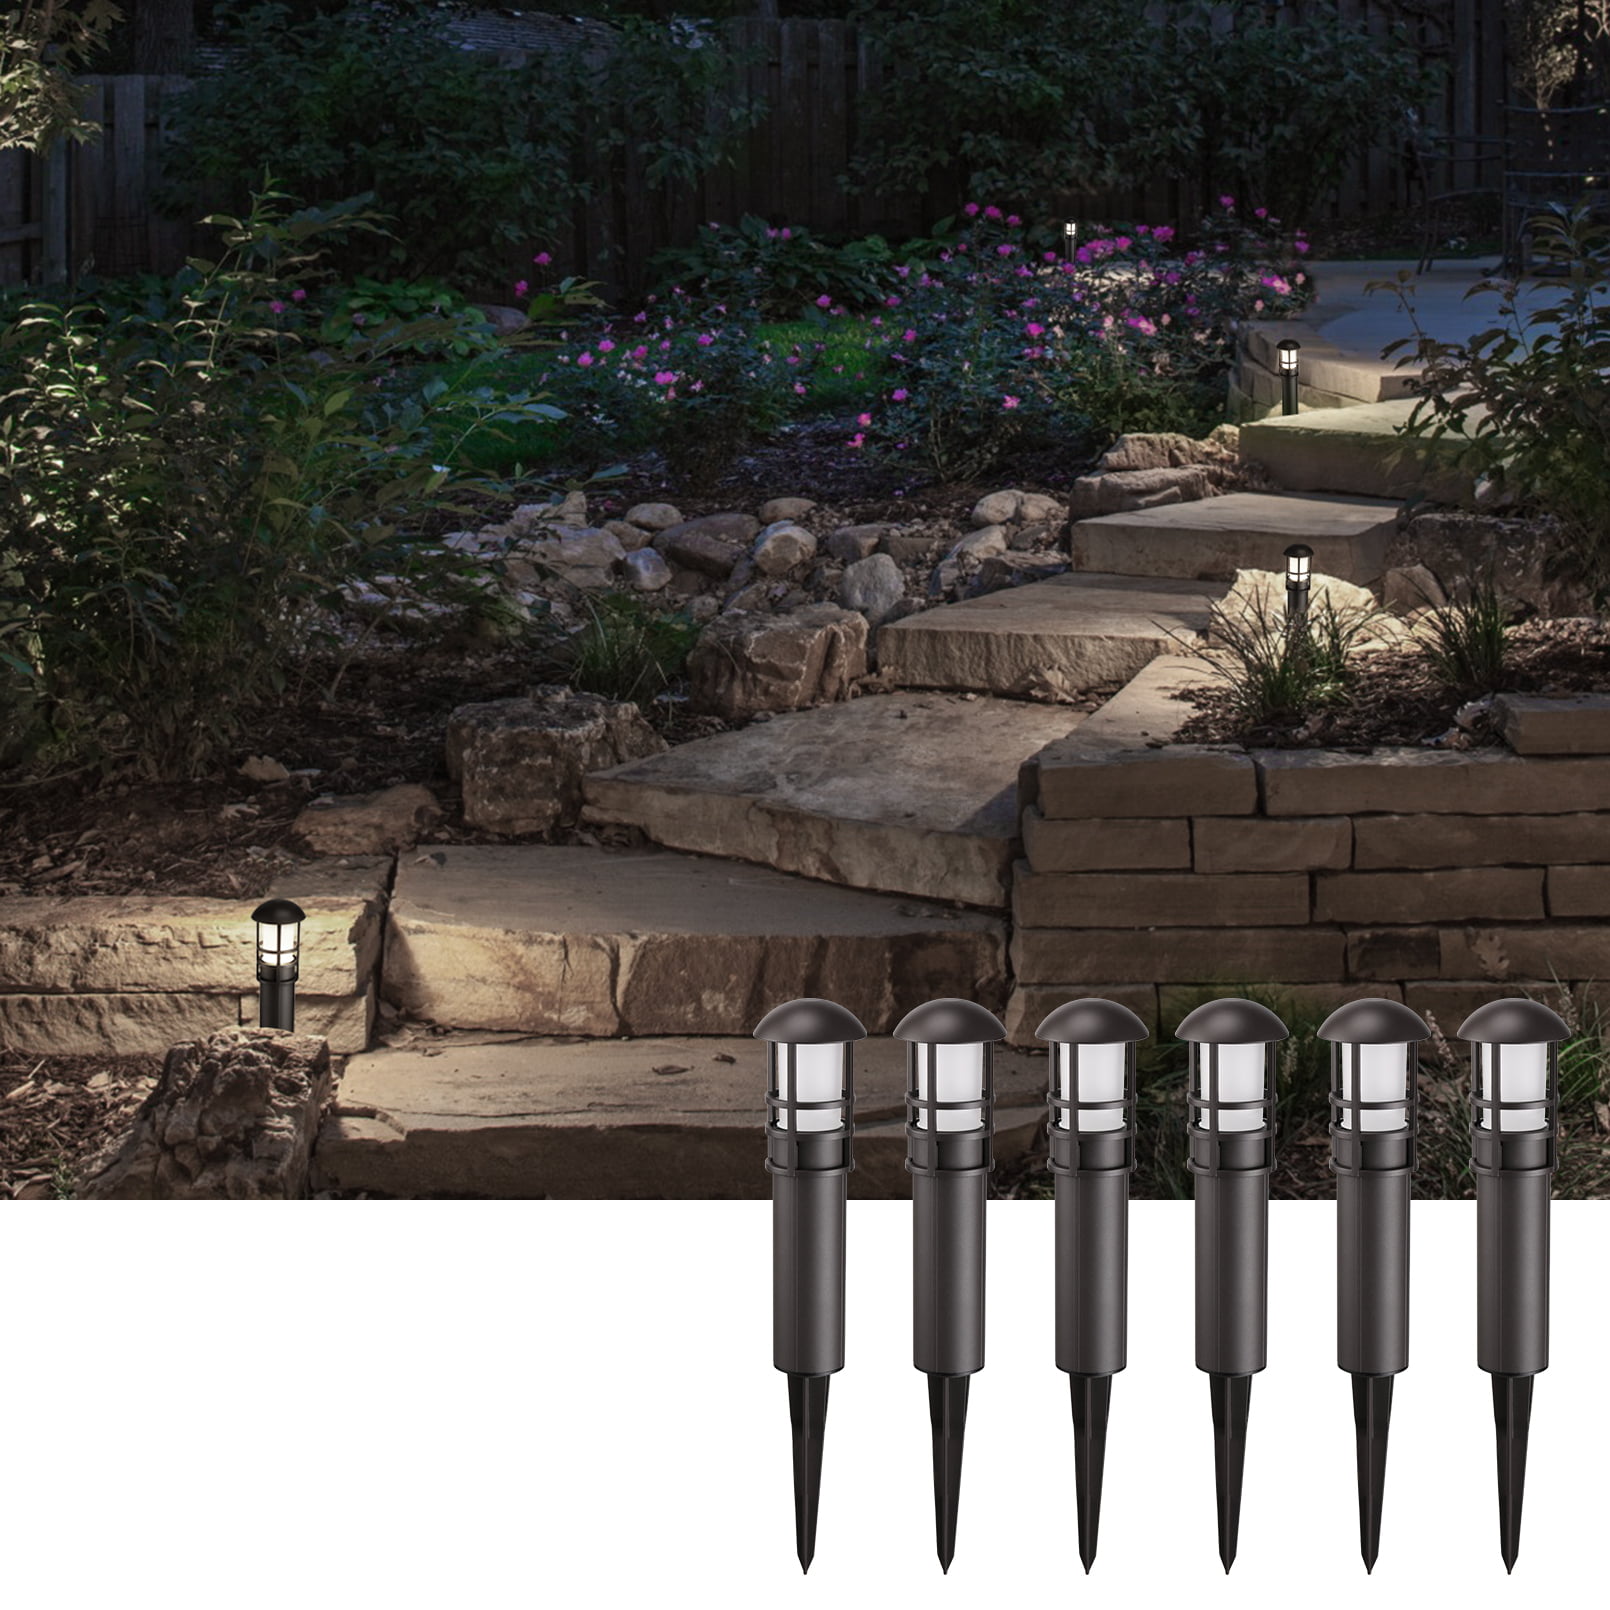 50W LED Flood Light Outdoor Garden Landscape Spot Lamp IP65 Waterproof 10 Pack 